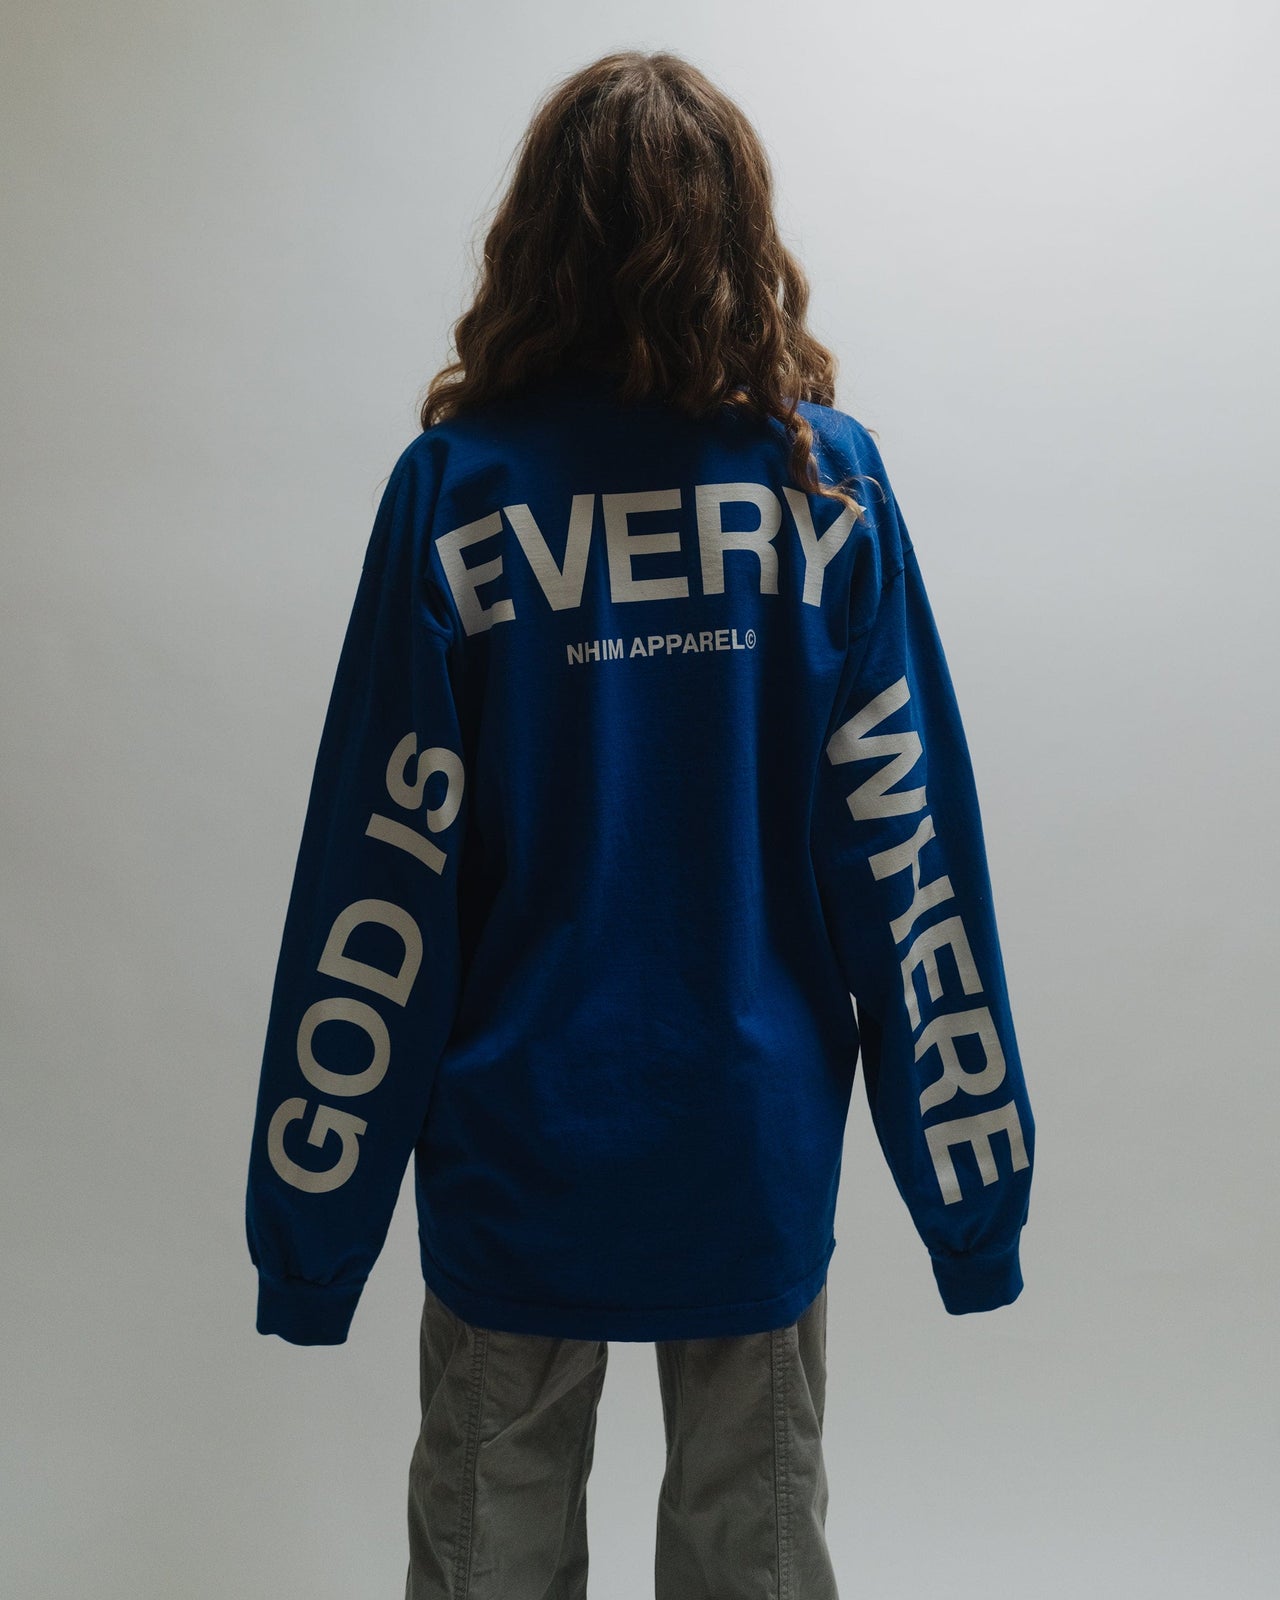 God Is Everywhere christian long sleeve shirt in cobalt by NHIM Apparel Christian clothing brand.